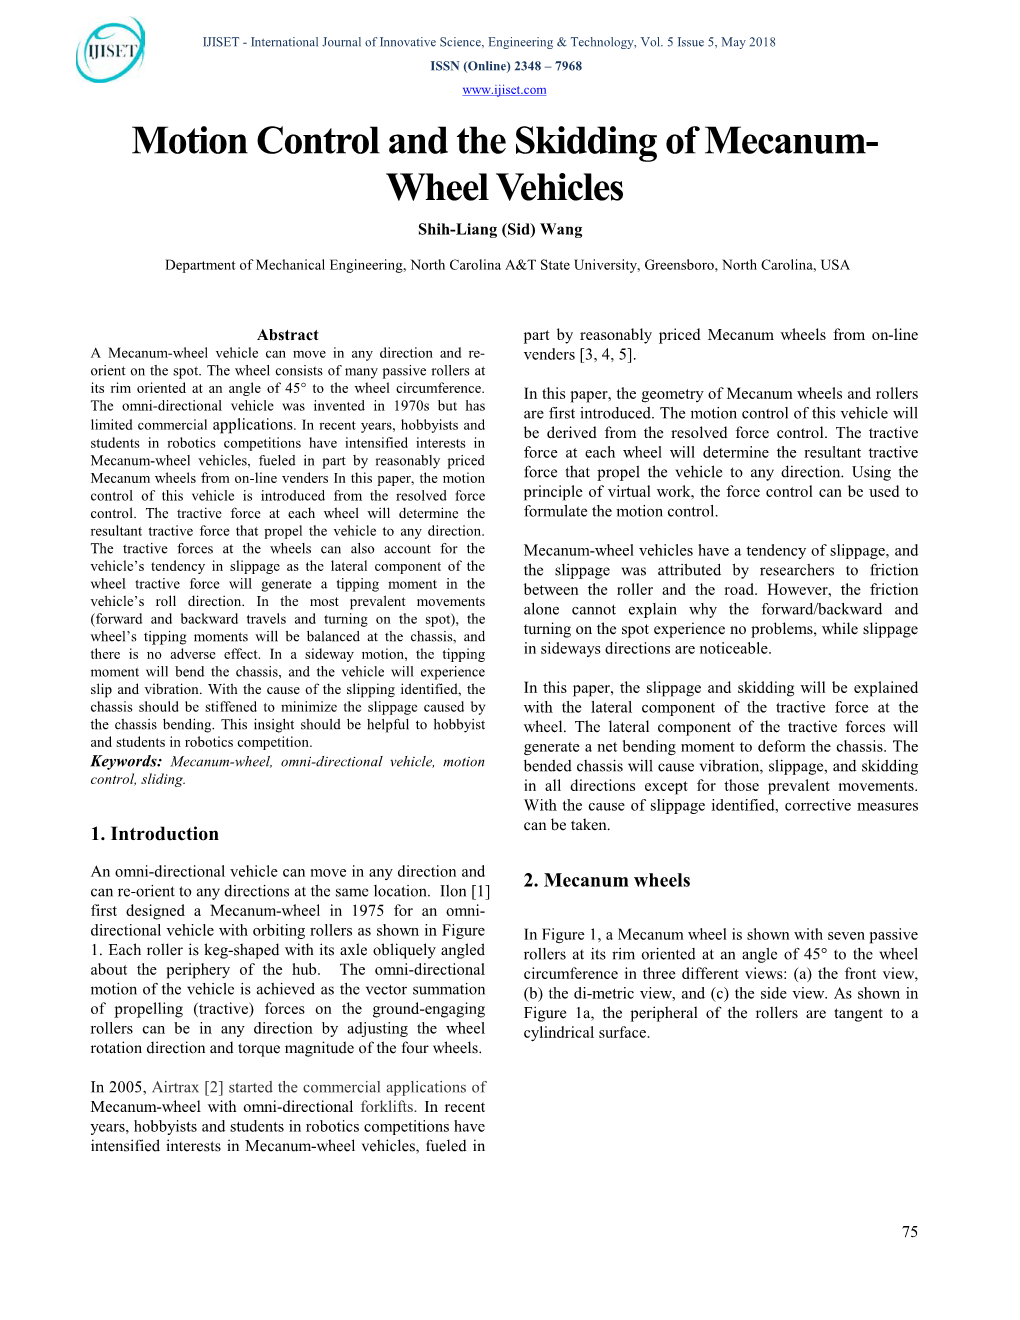 Motion Control and the Skidding of Mecanum- Wheel Vehicles Shih-Liang (Sid) Wang